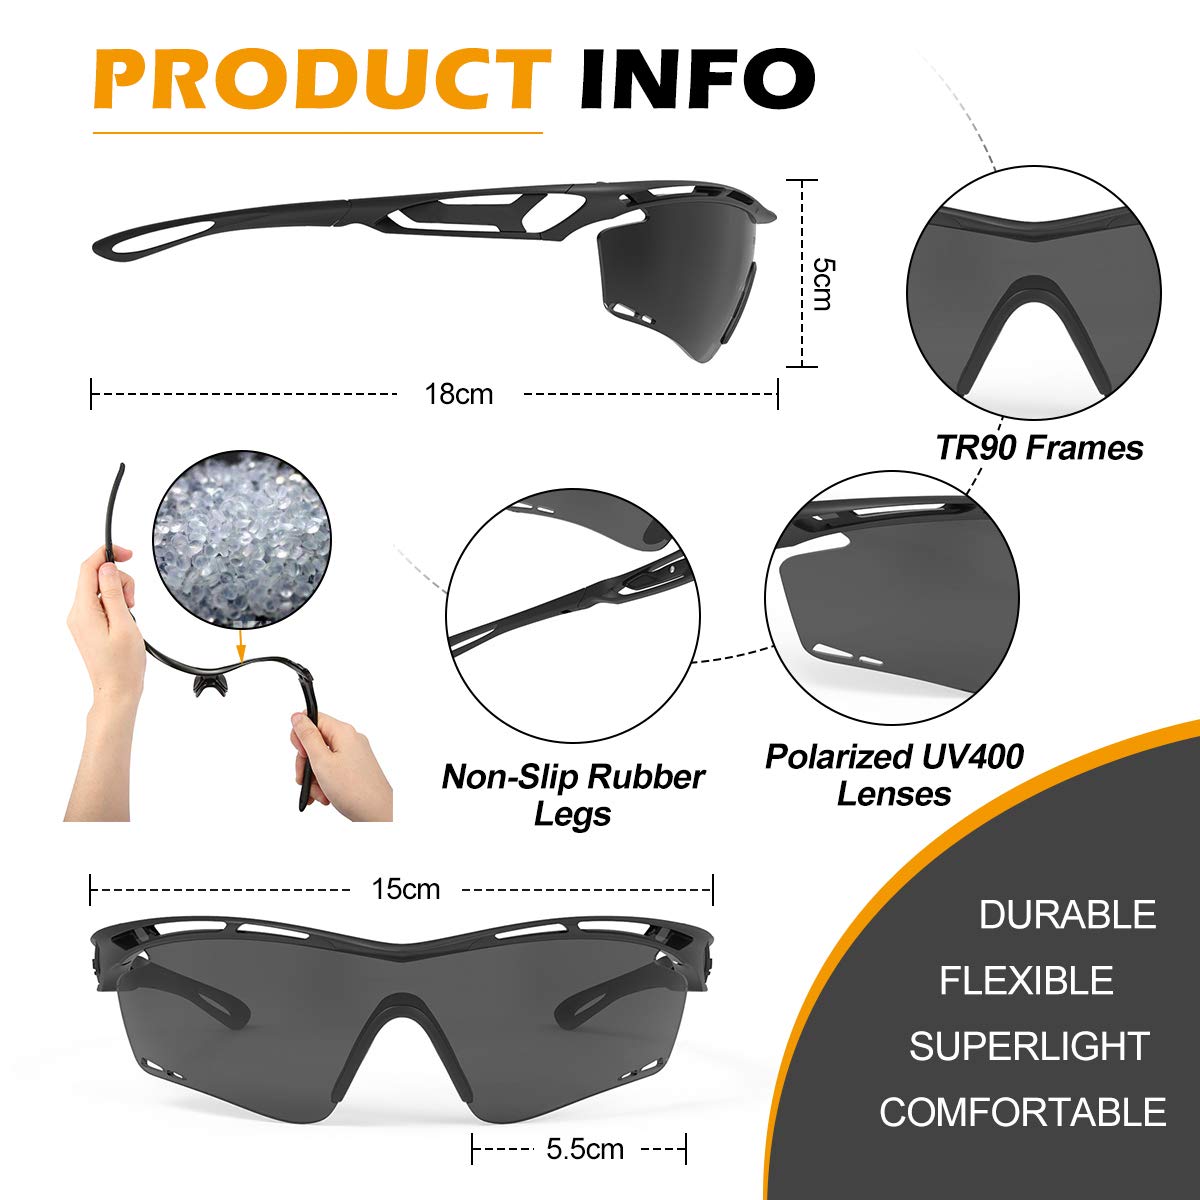 Ergonomic  design and super light glasses frame